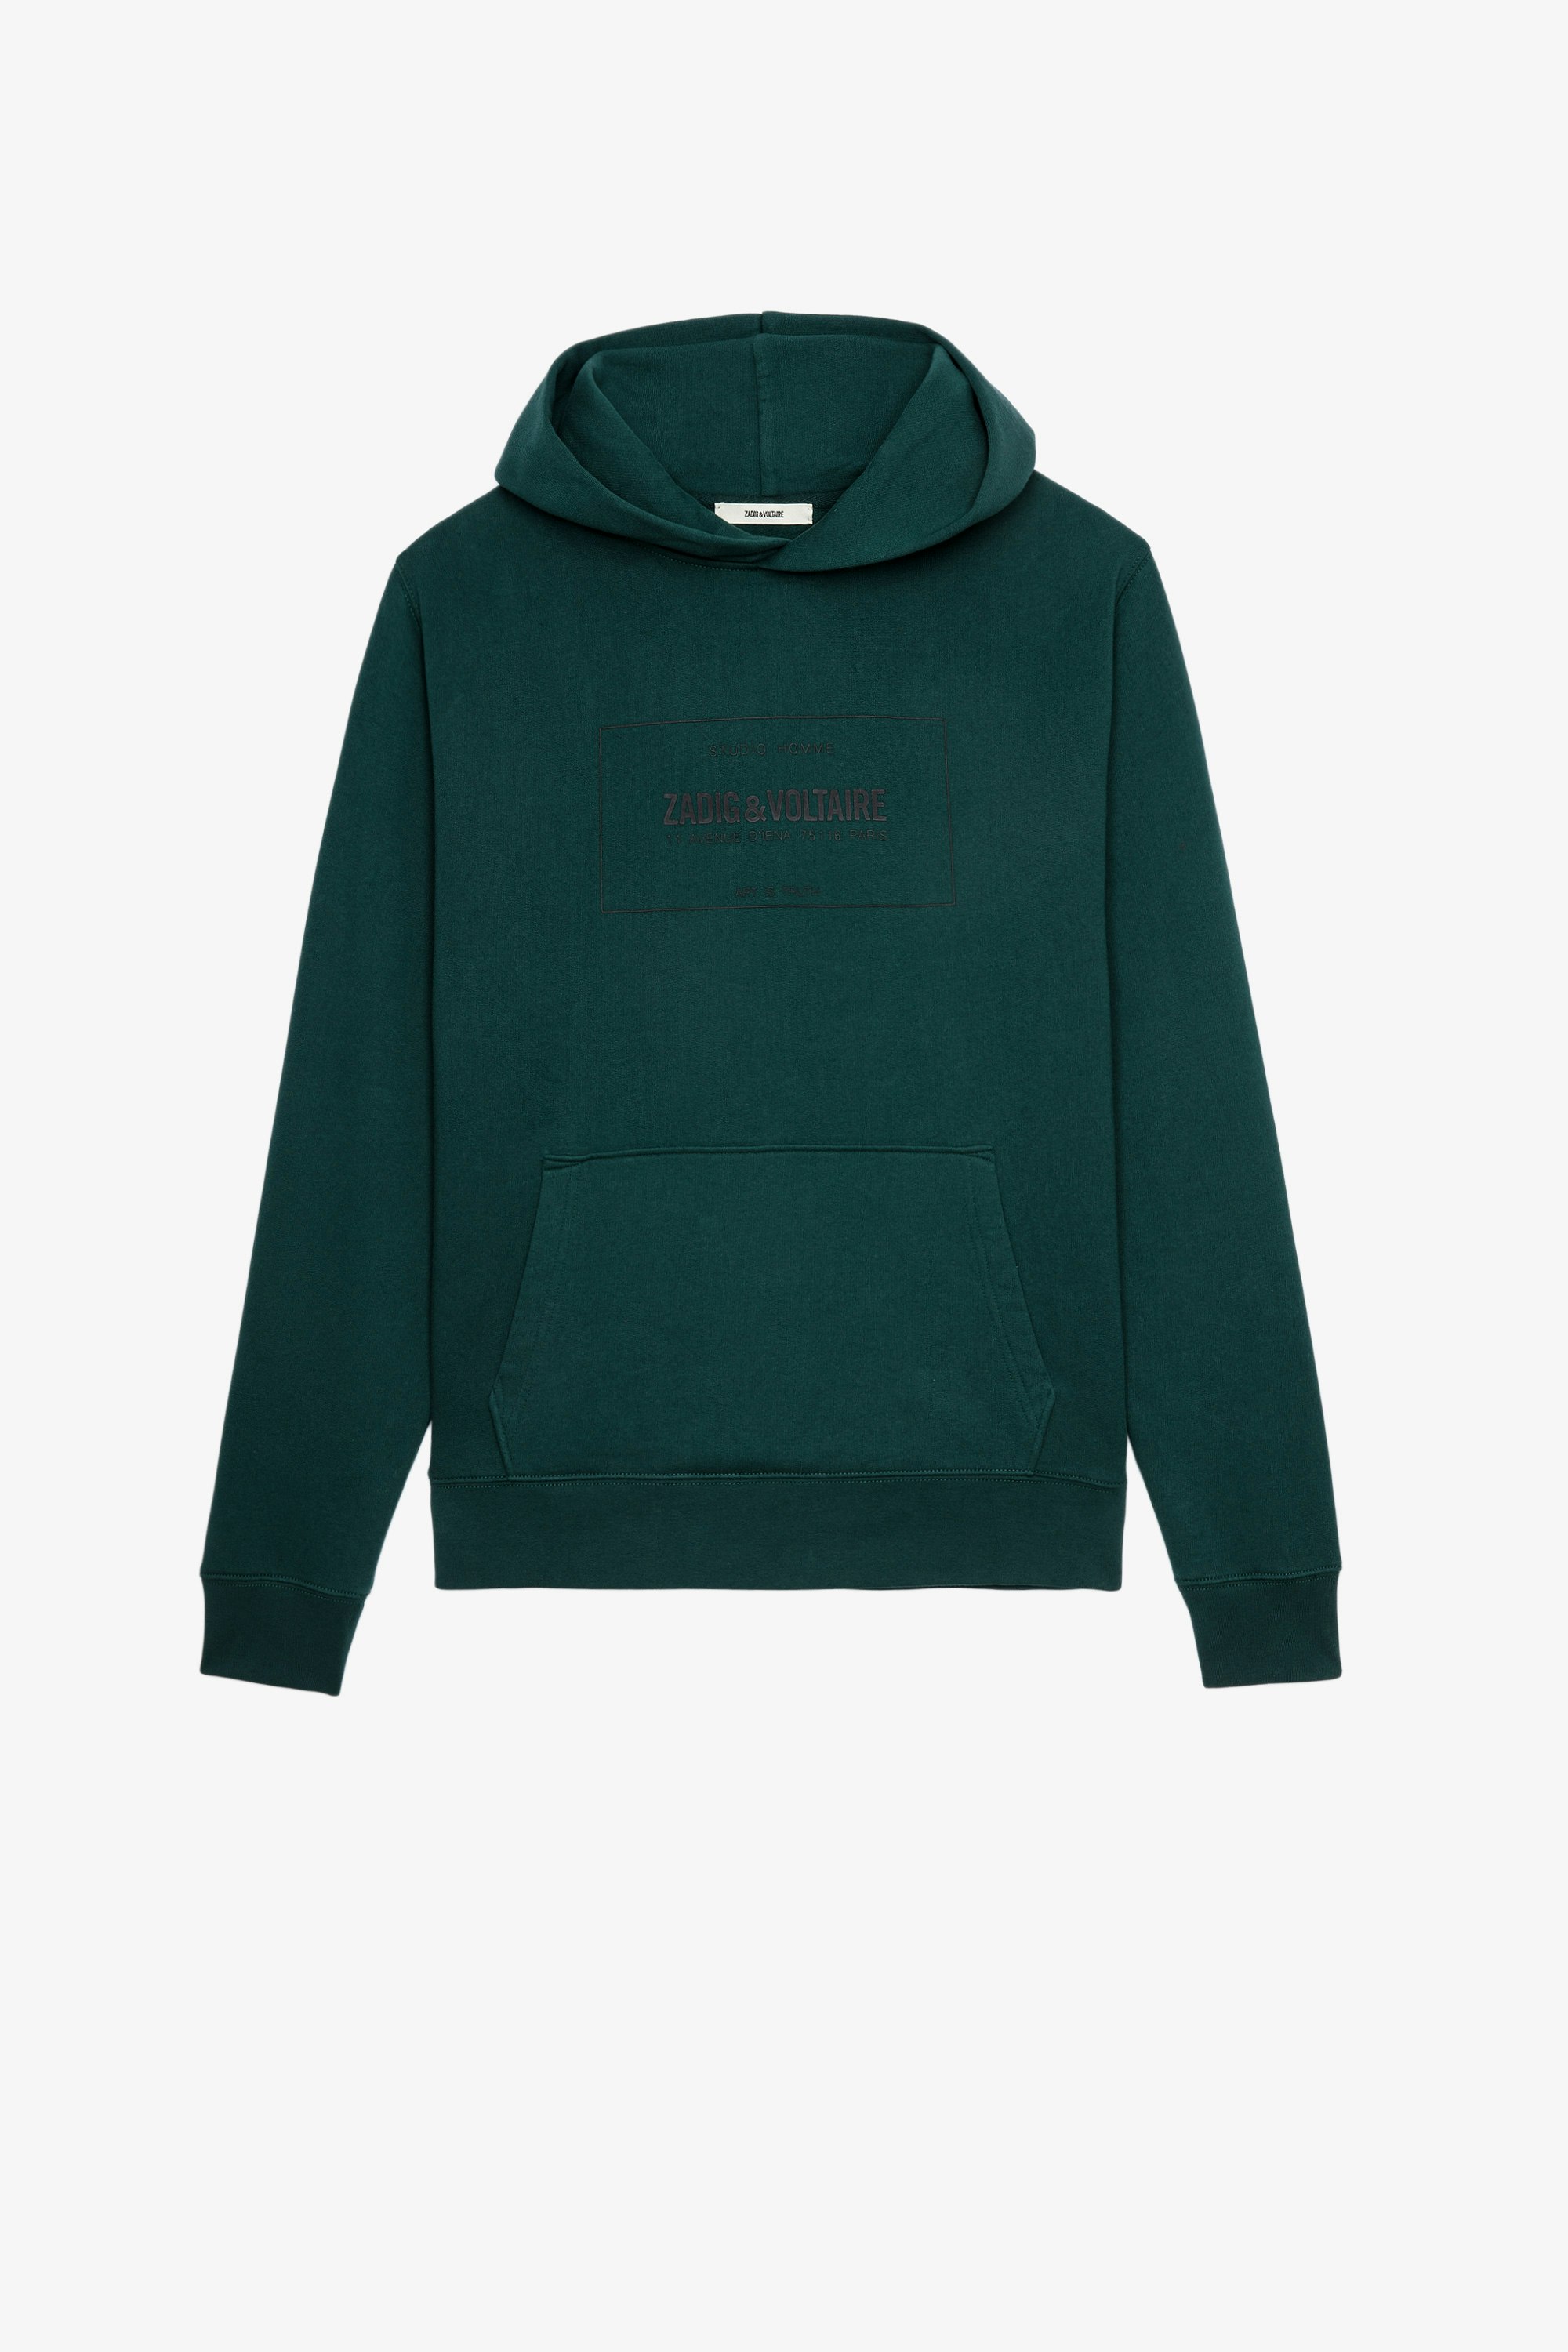 Sanchi Blason Sweatshirt Men’s green cotton hoodie